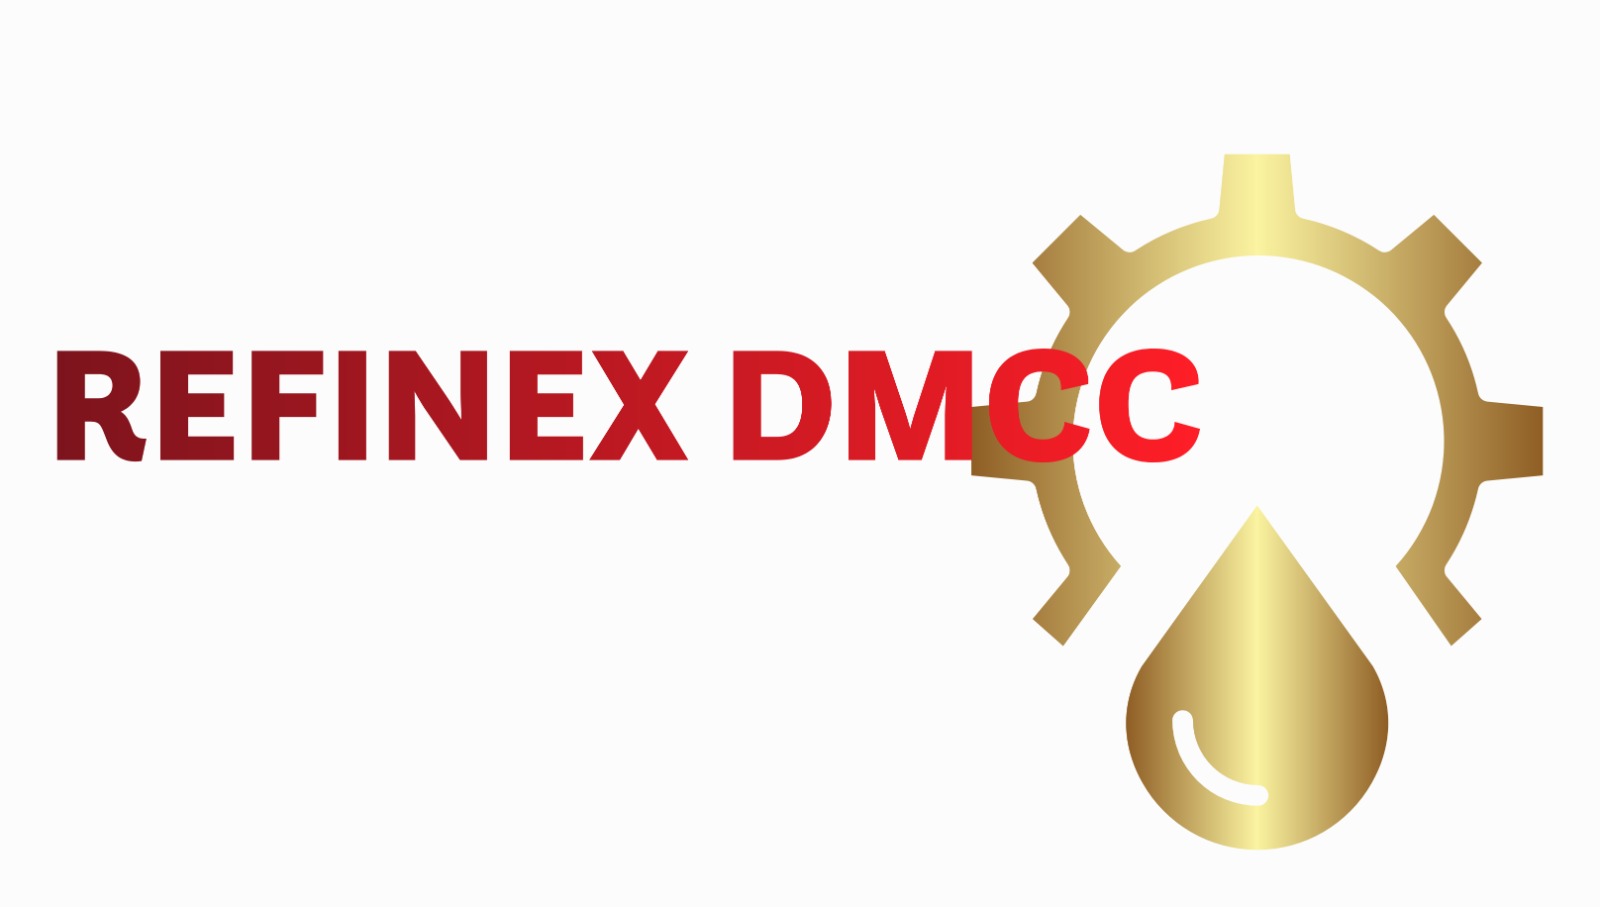 Refinex DMCC